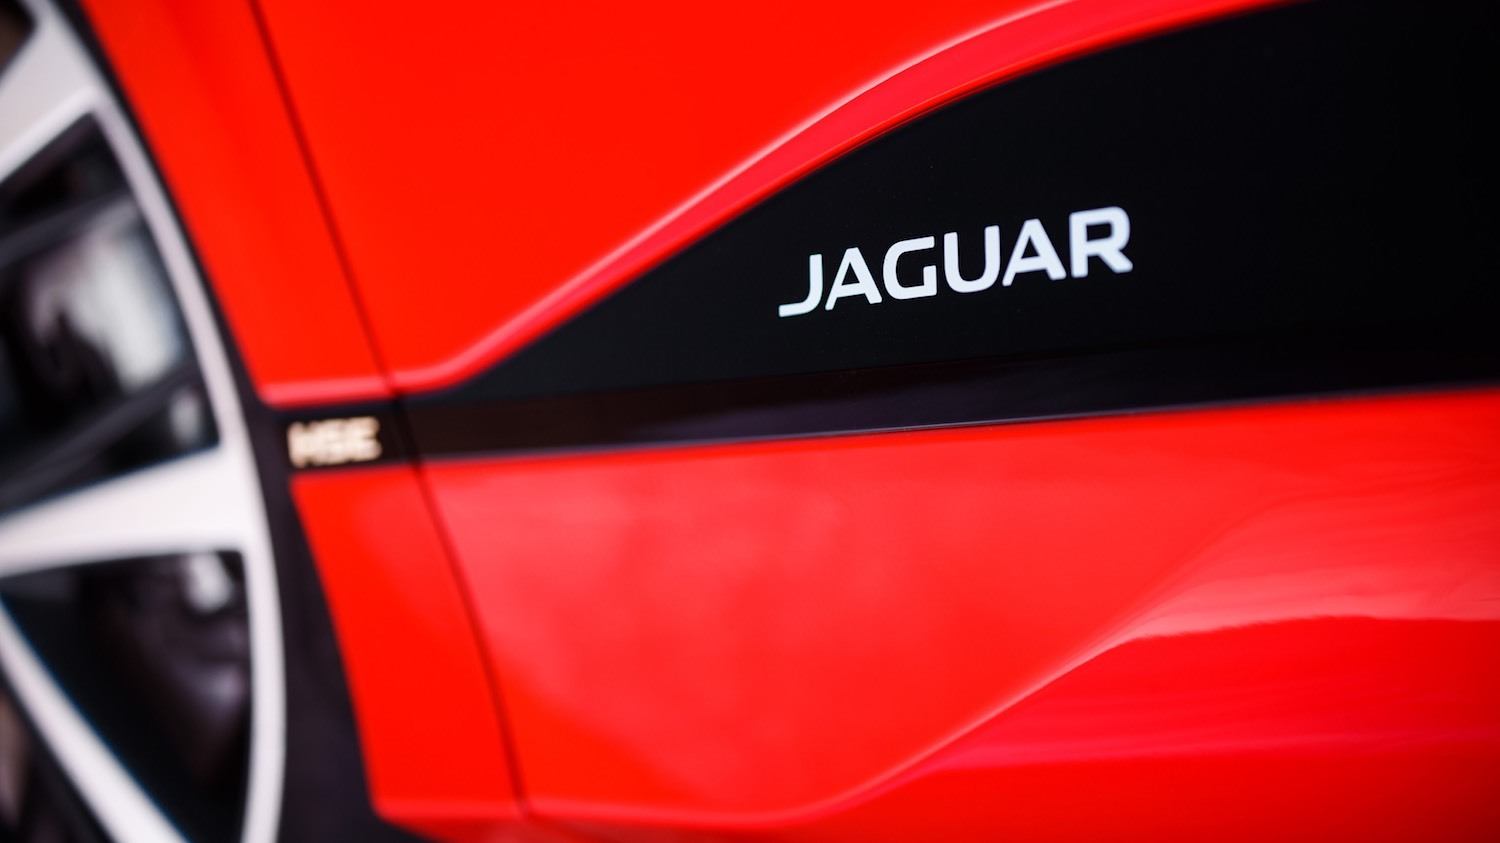 Neil Lyndon reviews the 2018 All-New Jaguar I-Pace Premium Electric SUV 19